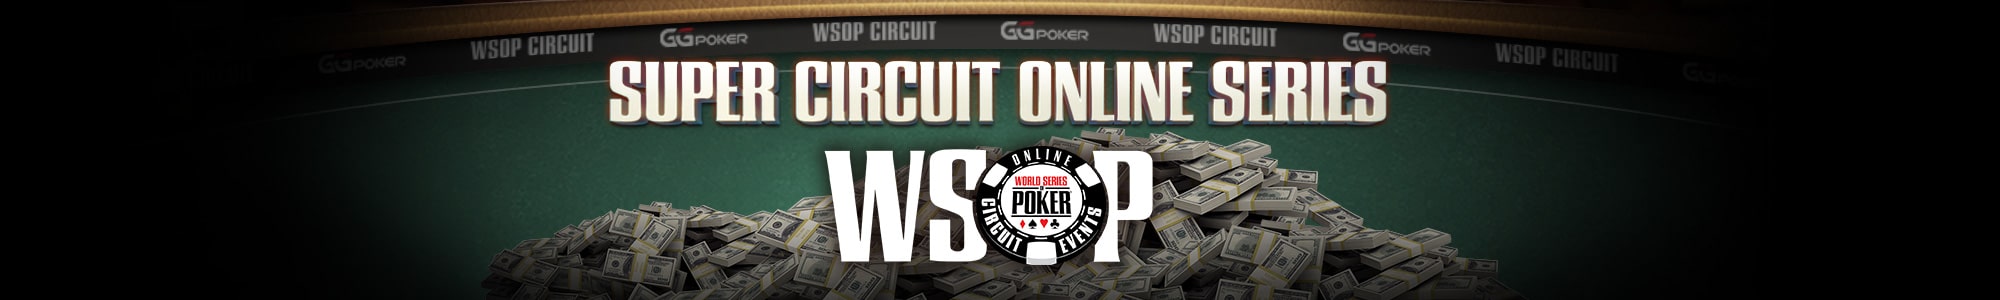 WSOP Super Circuit Online Series 2021 | GGPoker